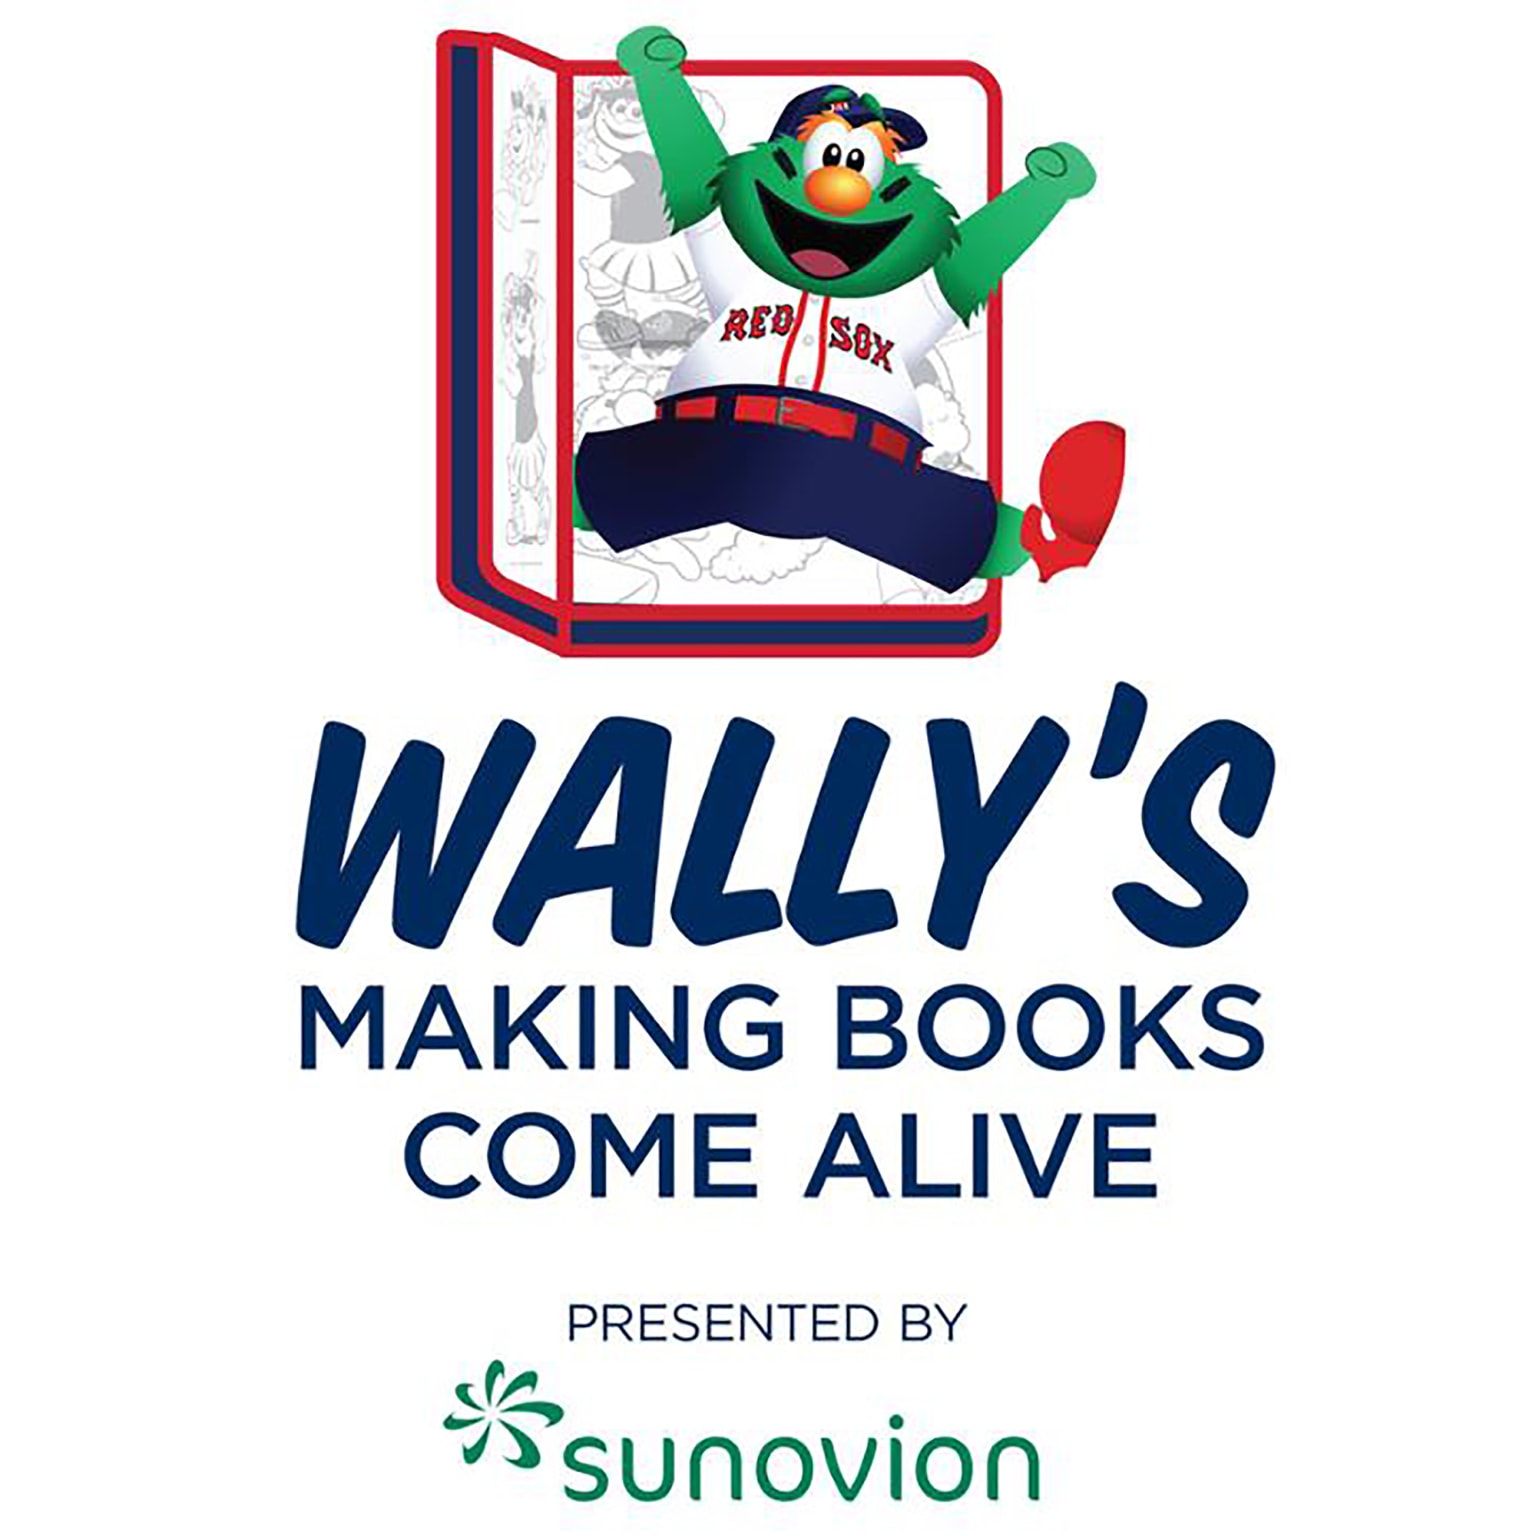 Calendar - Meet Wally, The Boston Red Sox Mascot - Mystic Aquarium